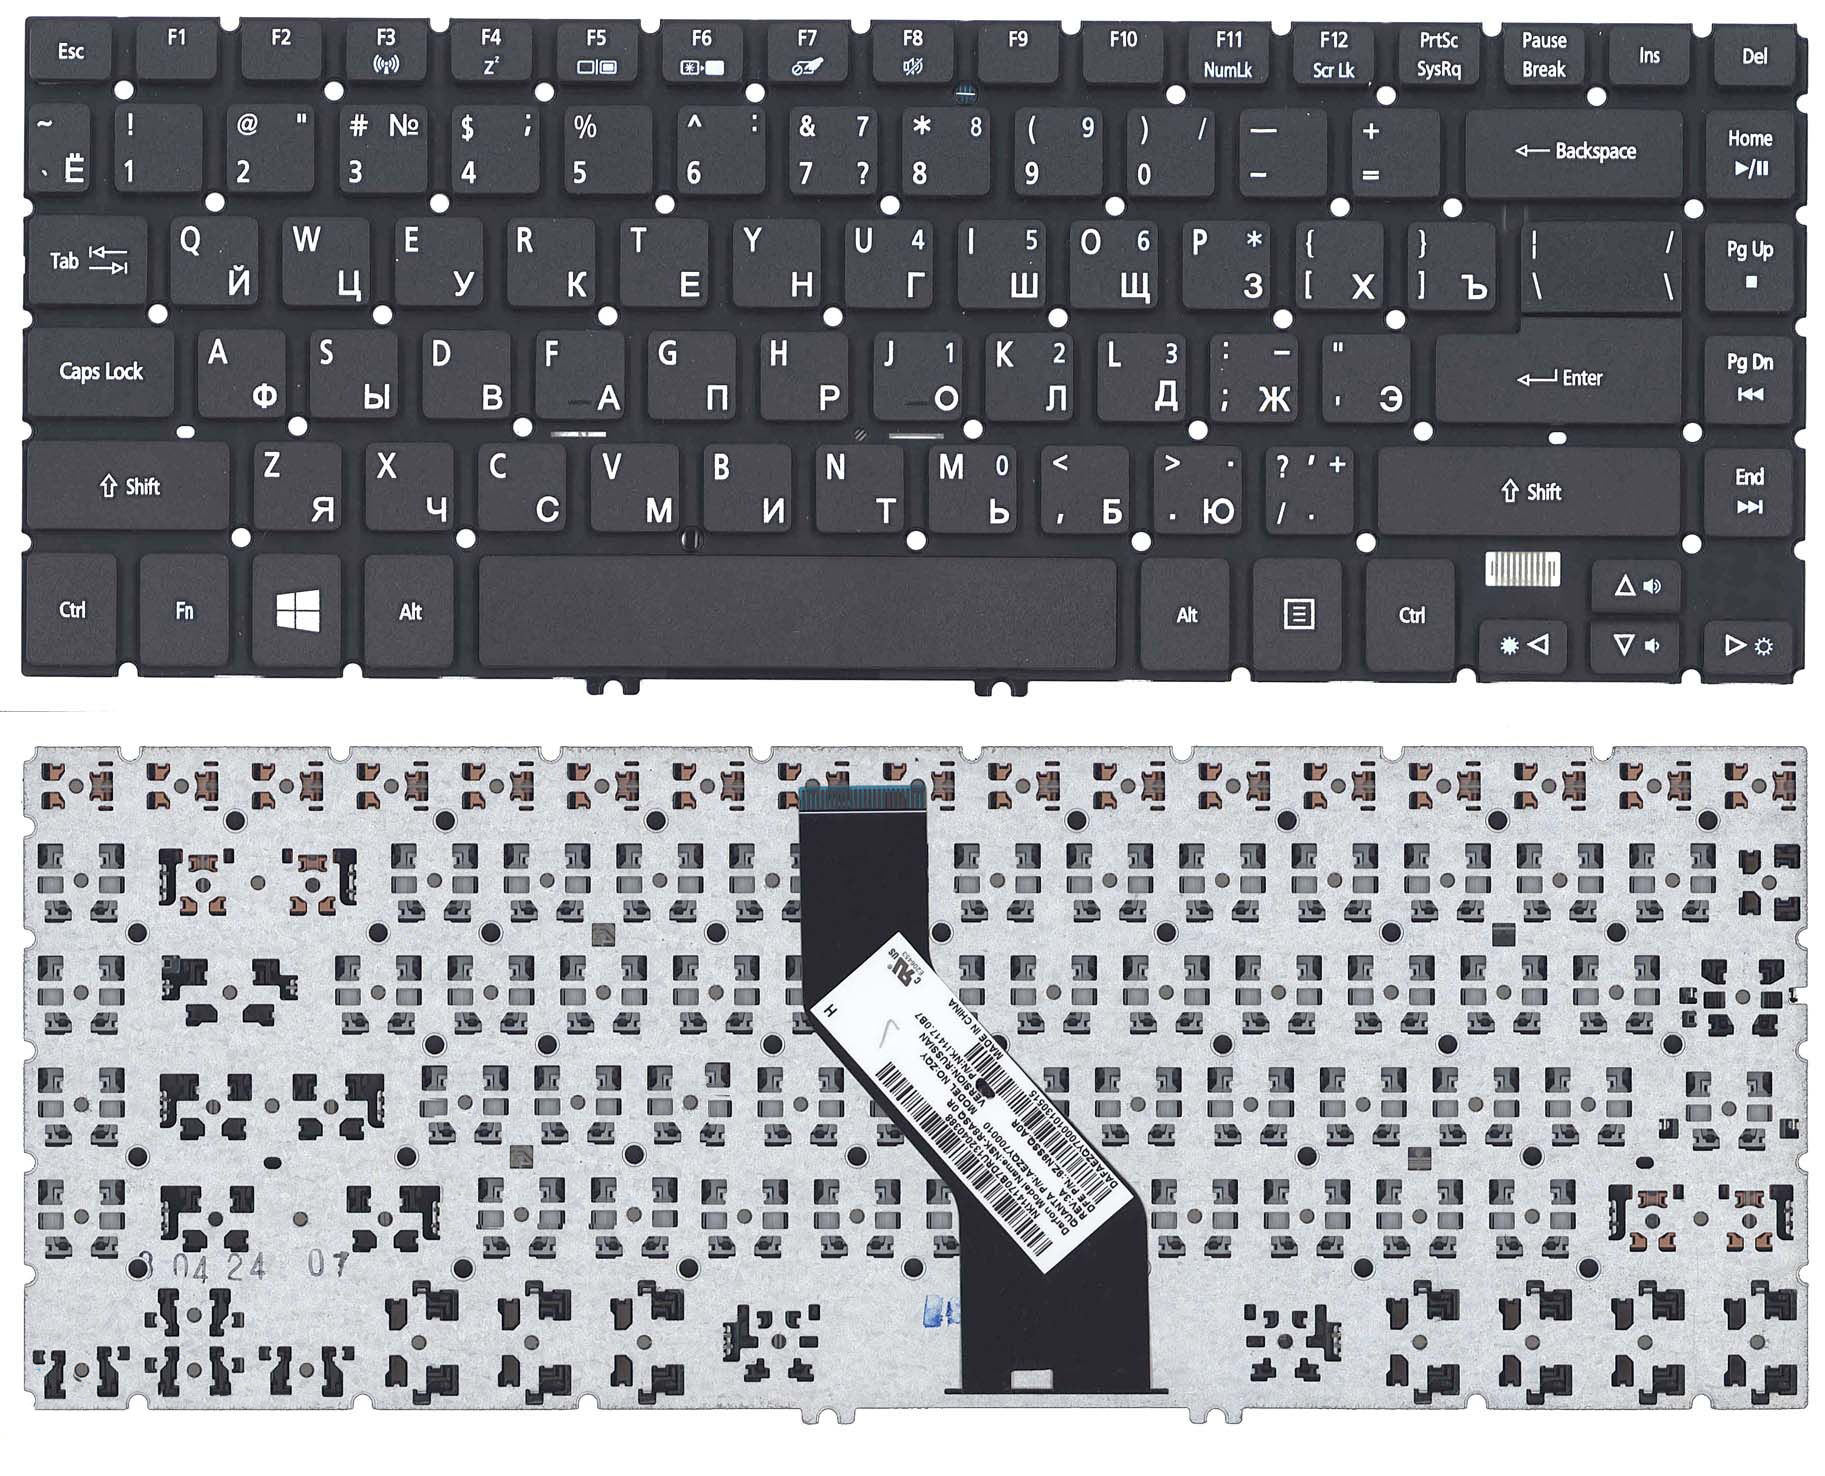 Replacement Keyboard for Aspire Series E1-472 M3-481 V5-431 V5-471 V5-472 V5-473 V7-481 Laptops Black US Layout with 1 Year Warranty by Laptopking